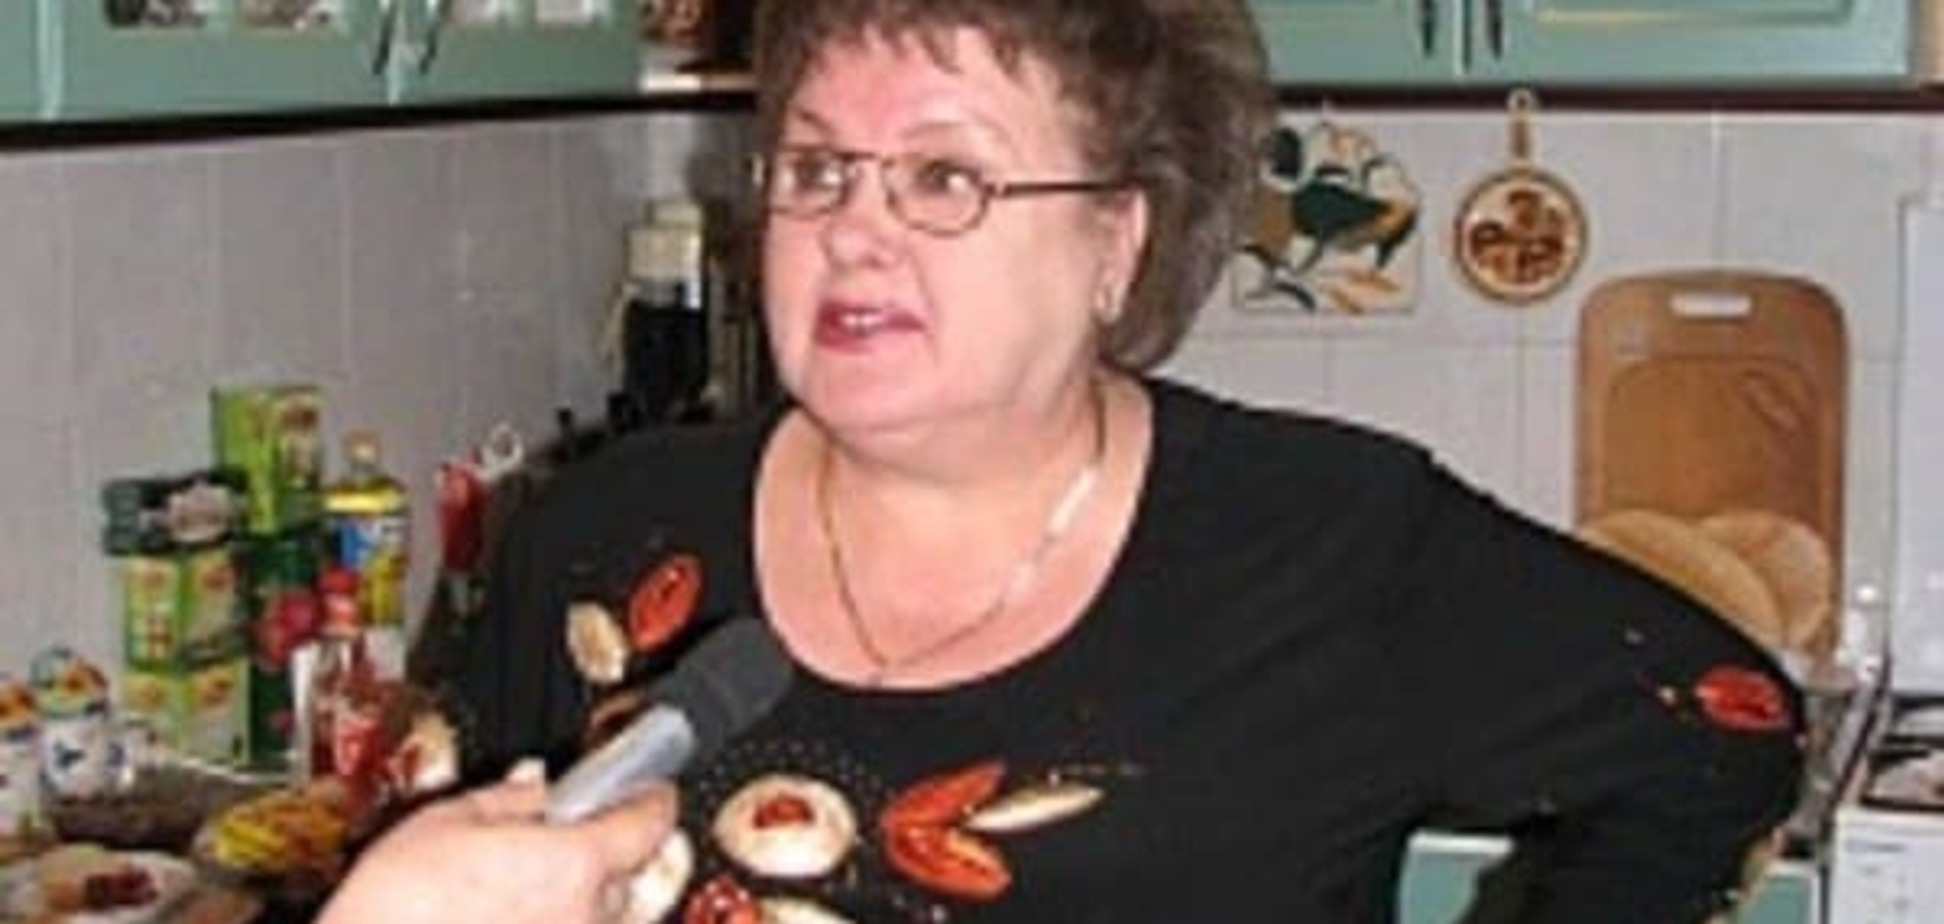 Людмила Шаповалова